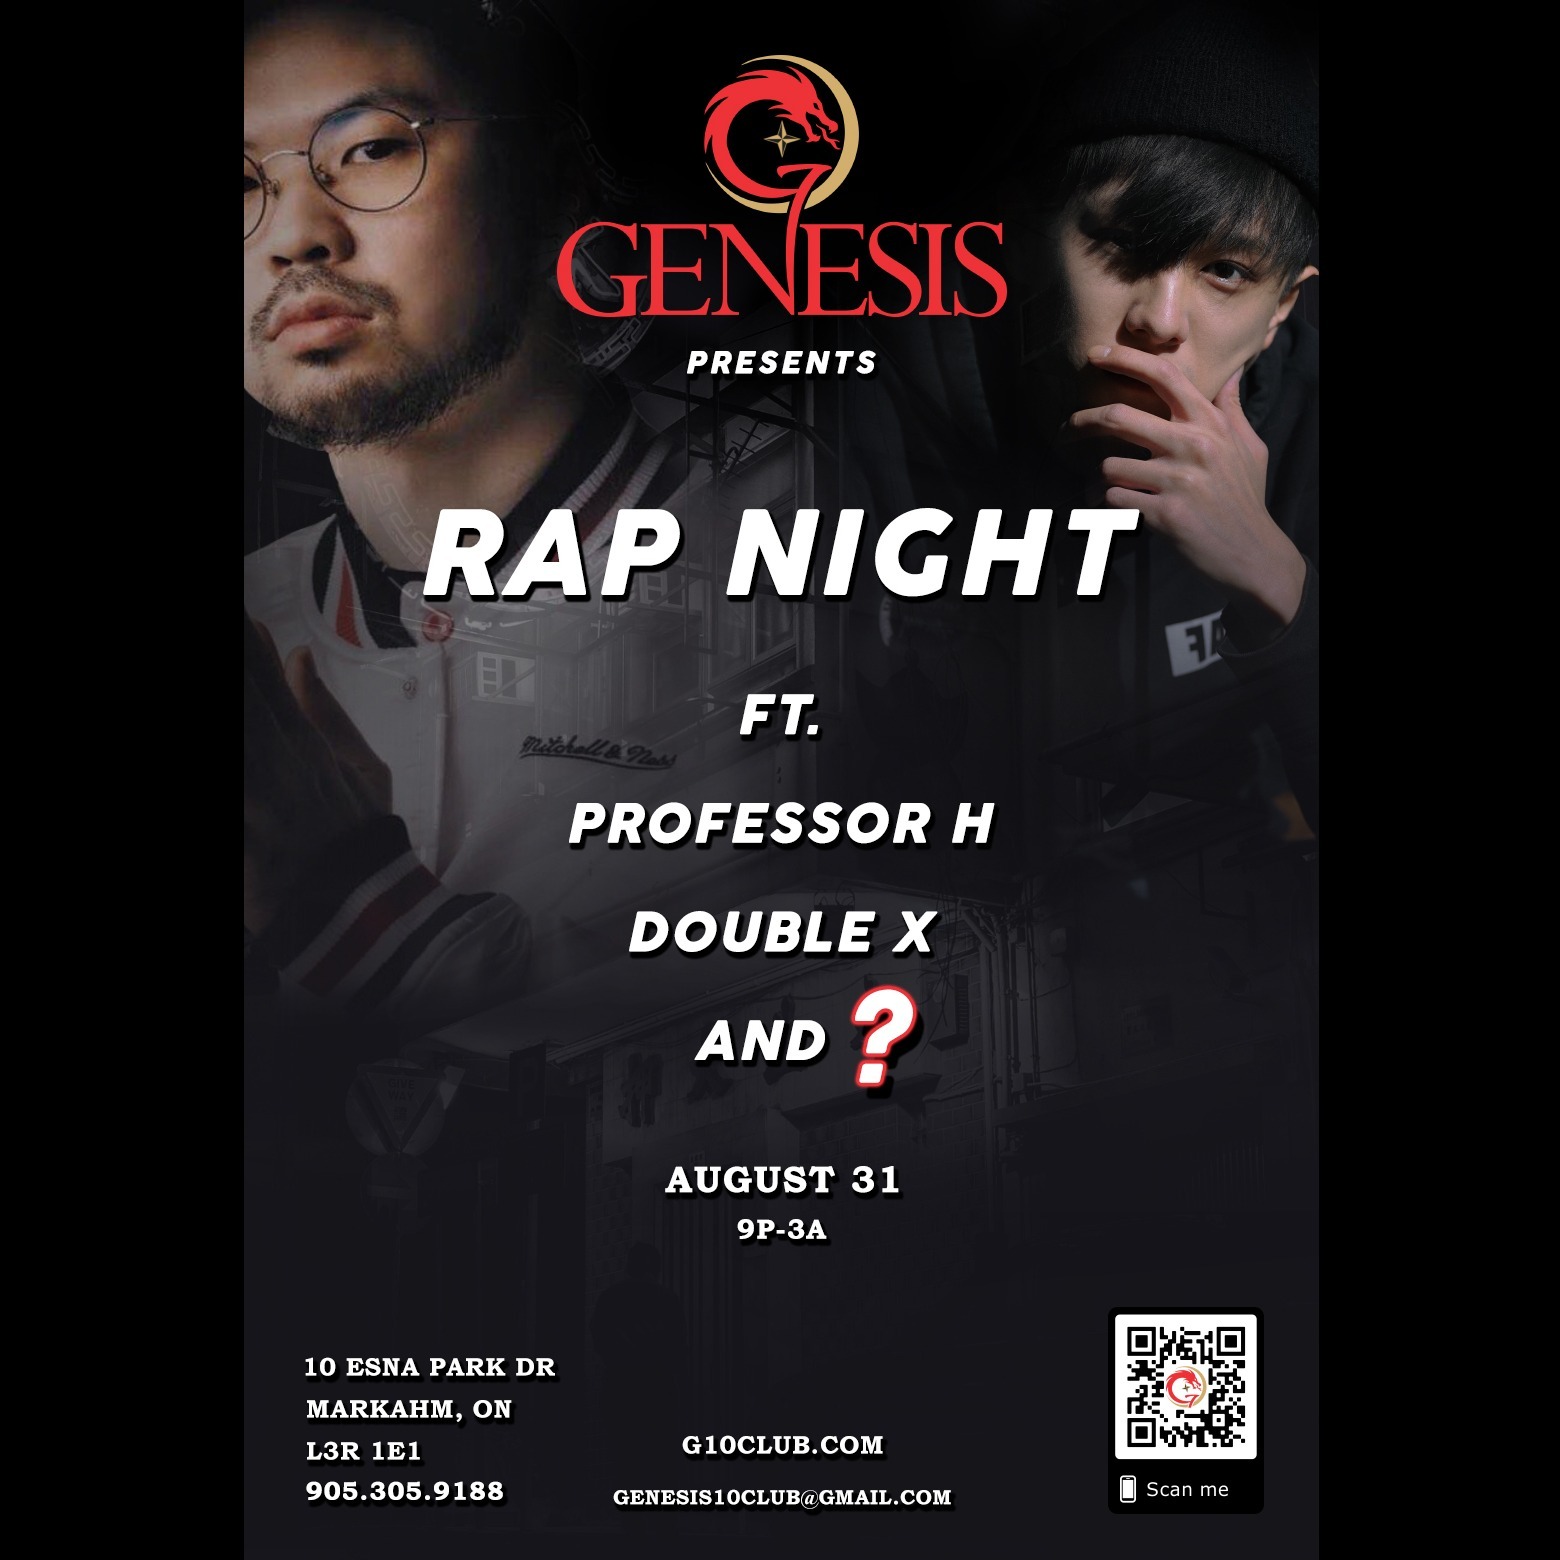 Genesis Presents Rap Night @ Boss Club 